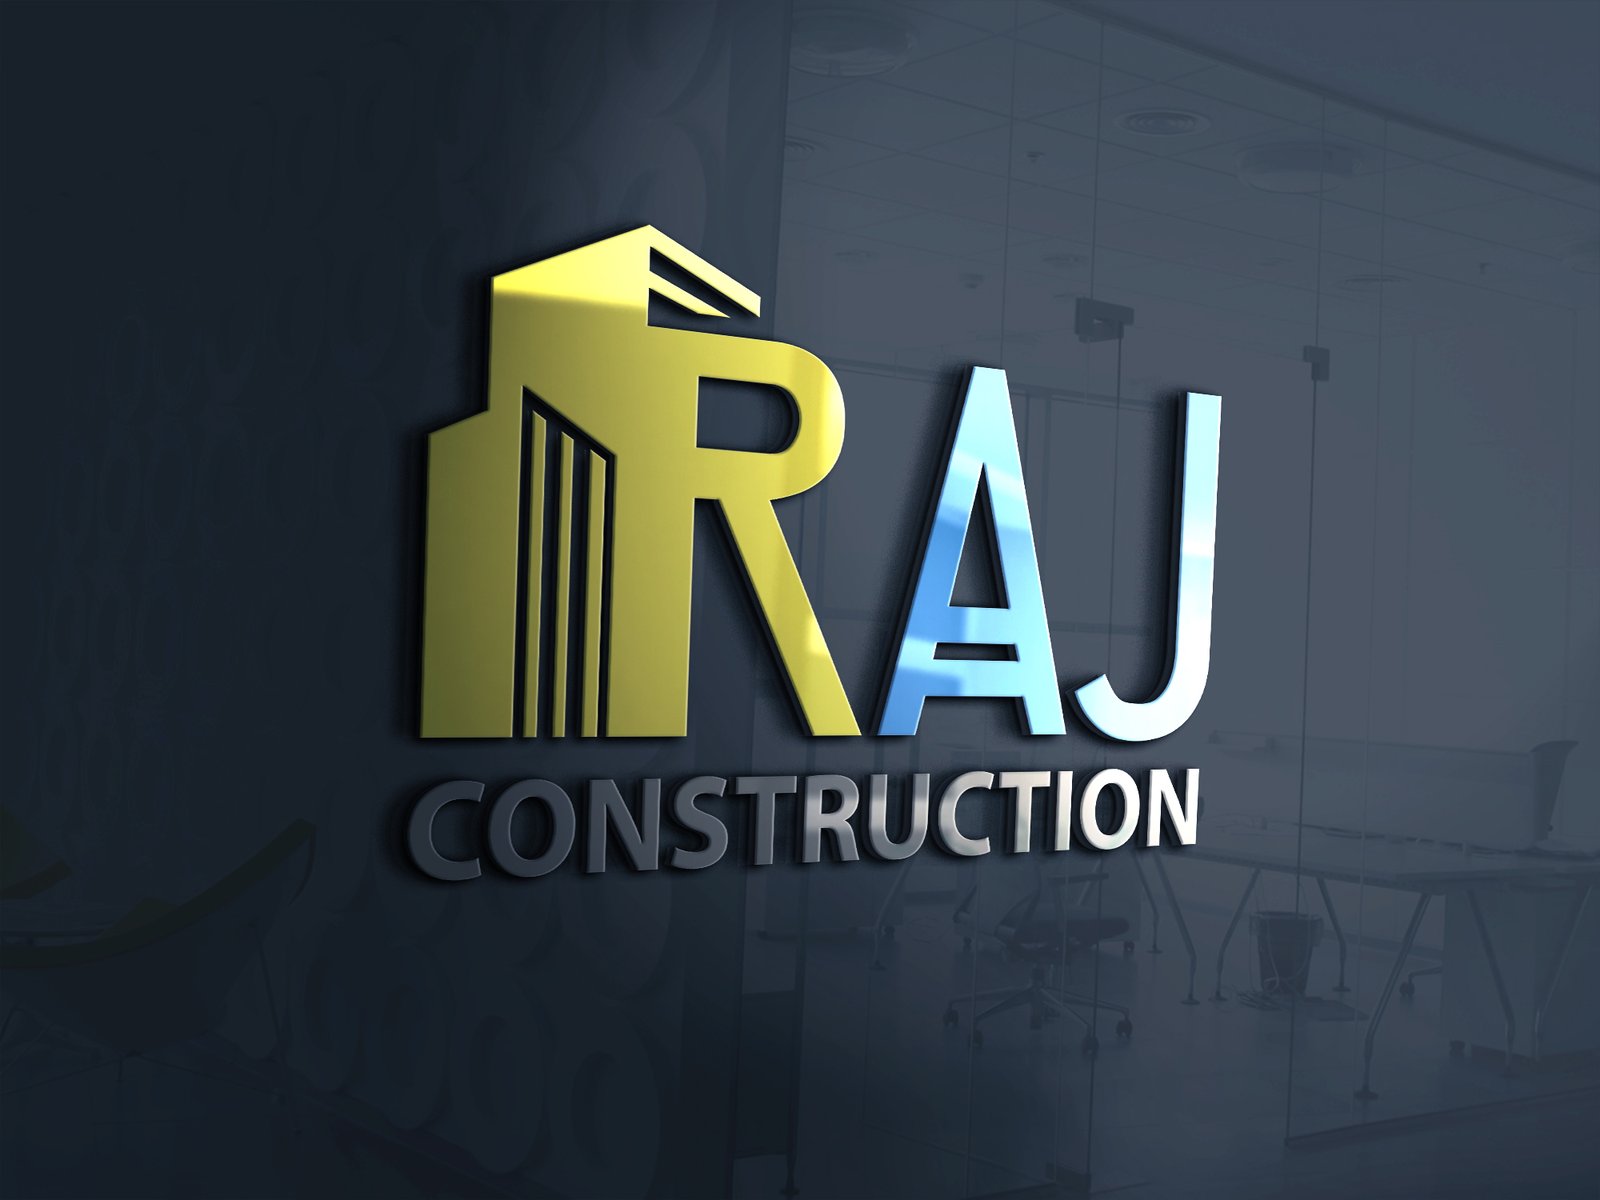 Raj contraction company logo design by Badri Design